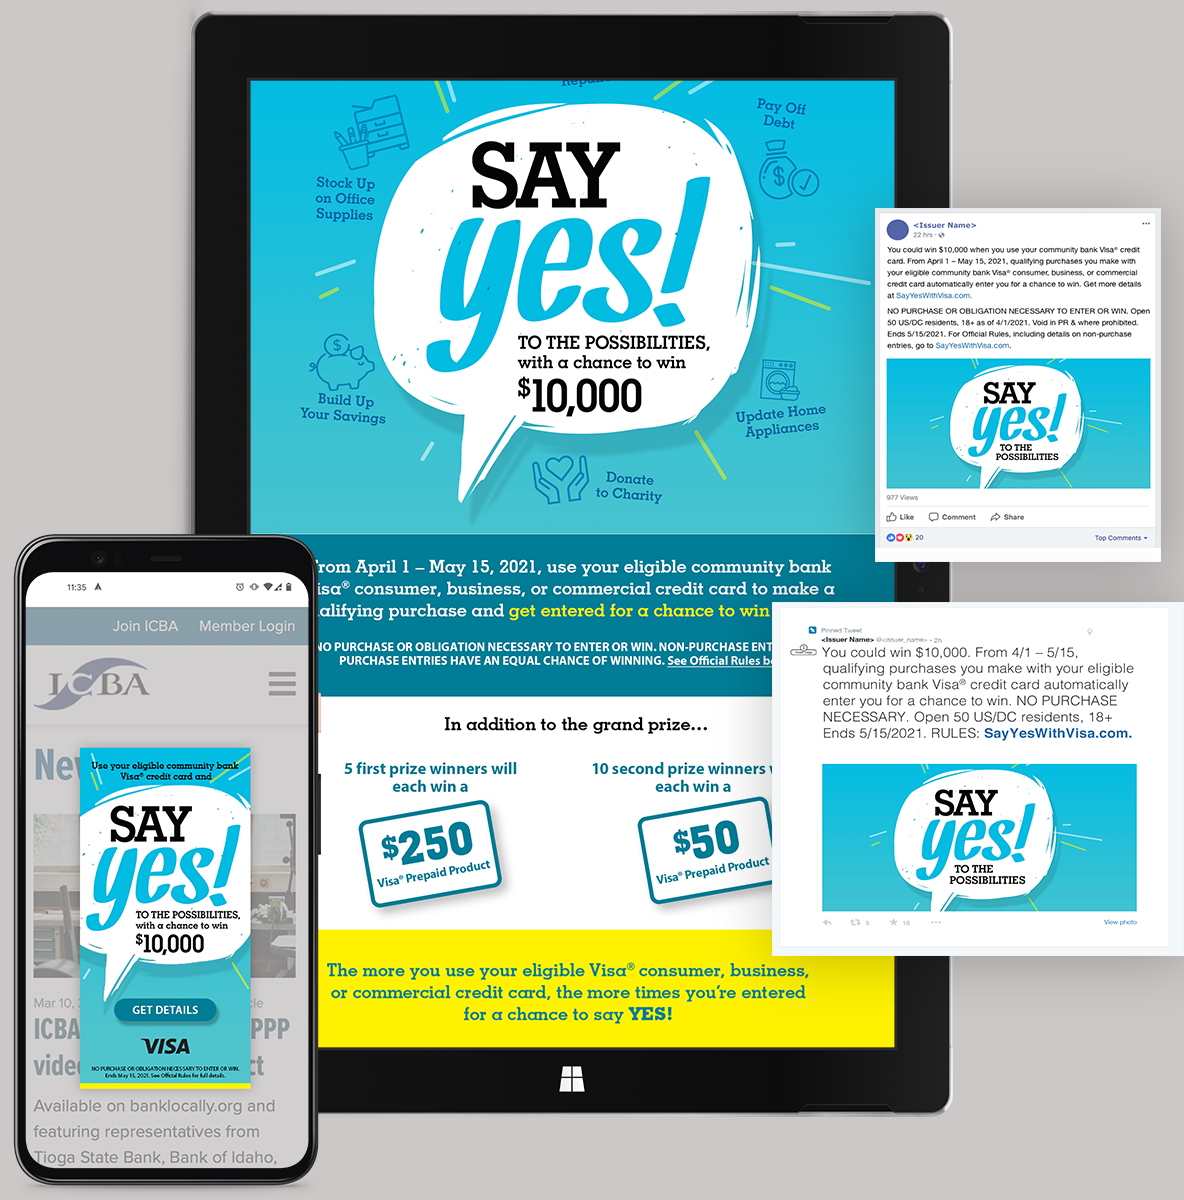 Visa ICBA Say Yes promo materials, social ads, email, and banner ad